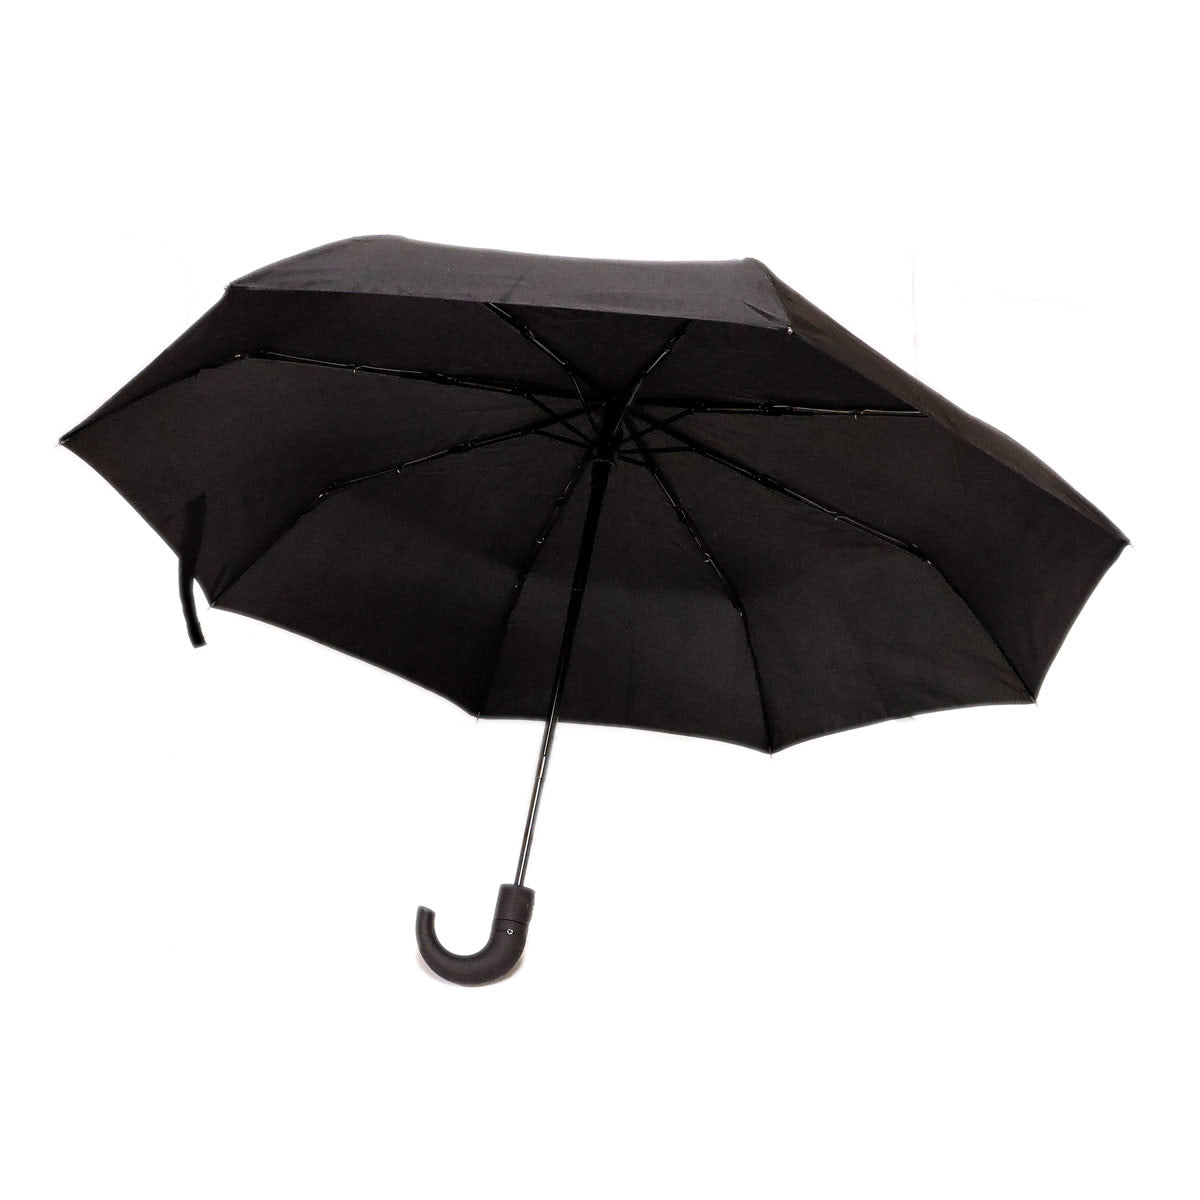 35" Compact Automatic Umbrella